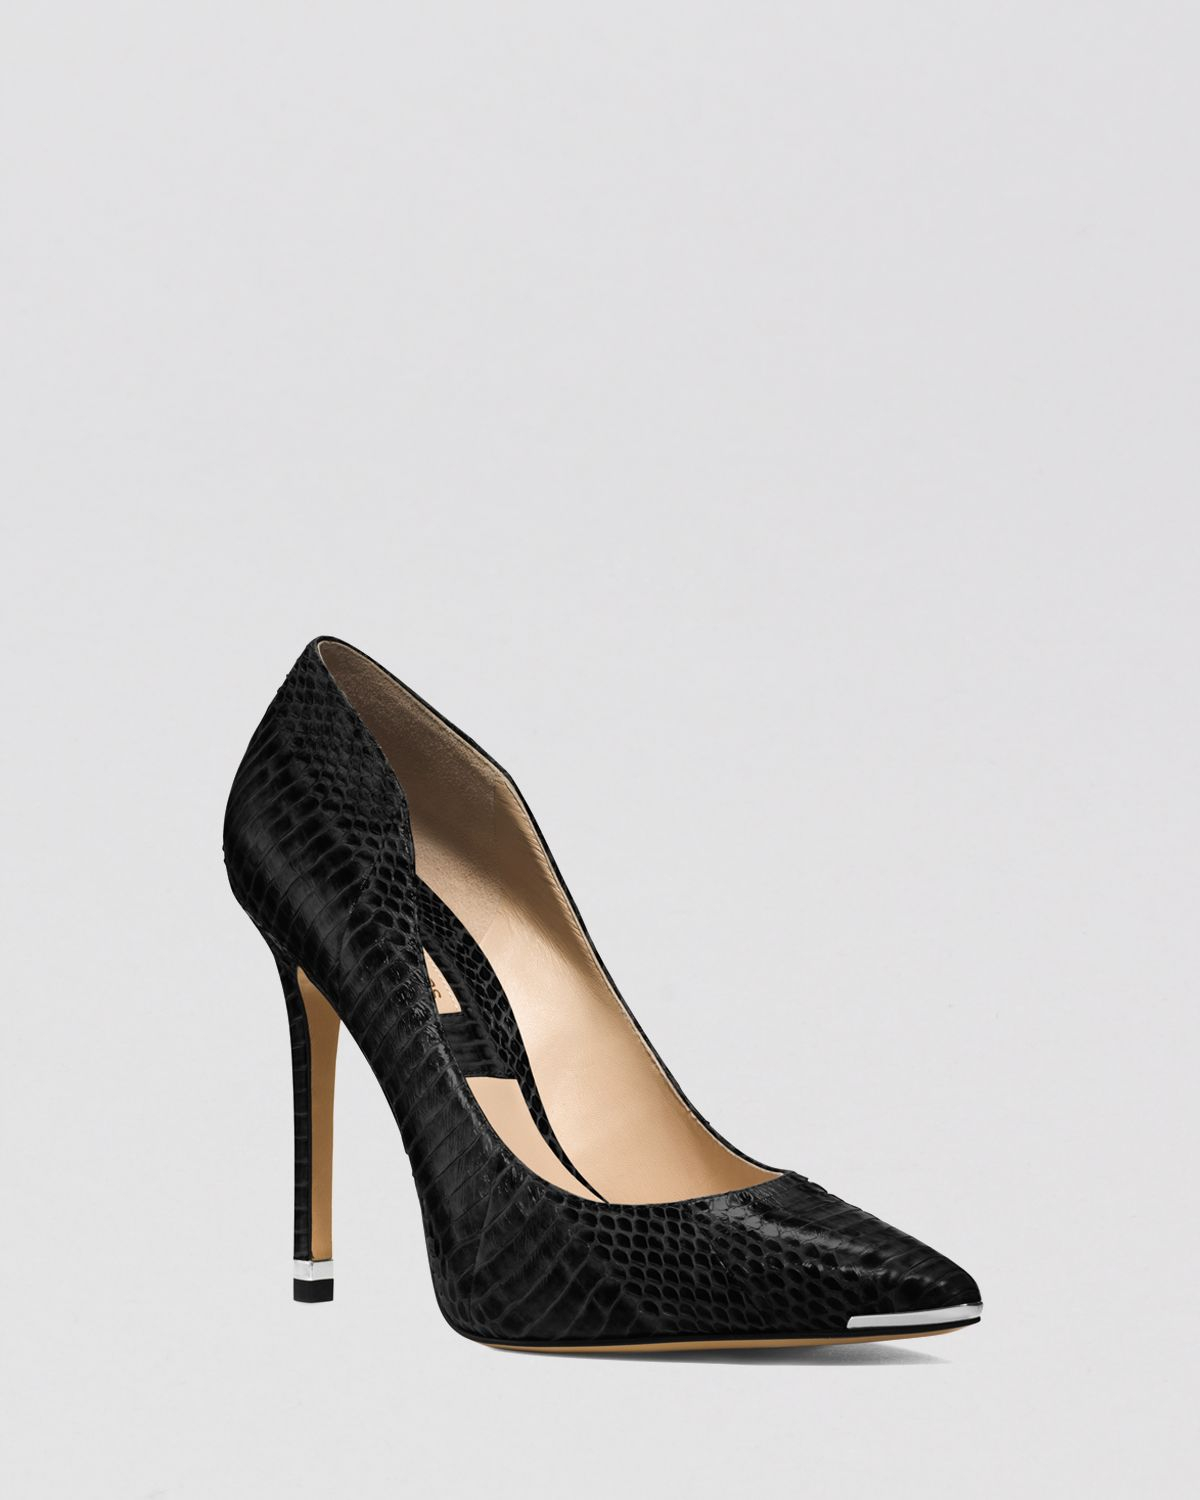 Carolina Herrera Black Snake Skin Heeled Shoes | EB